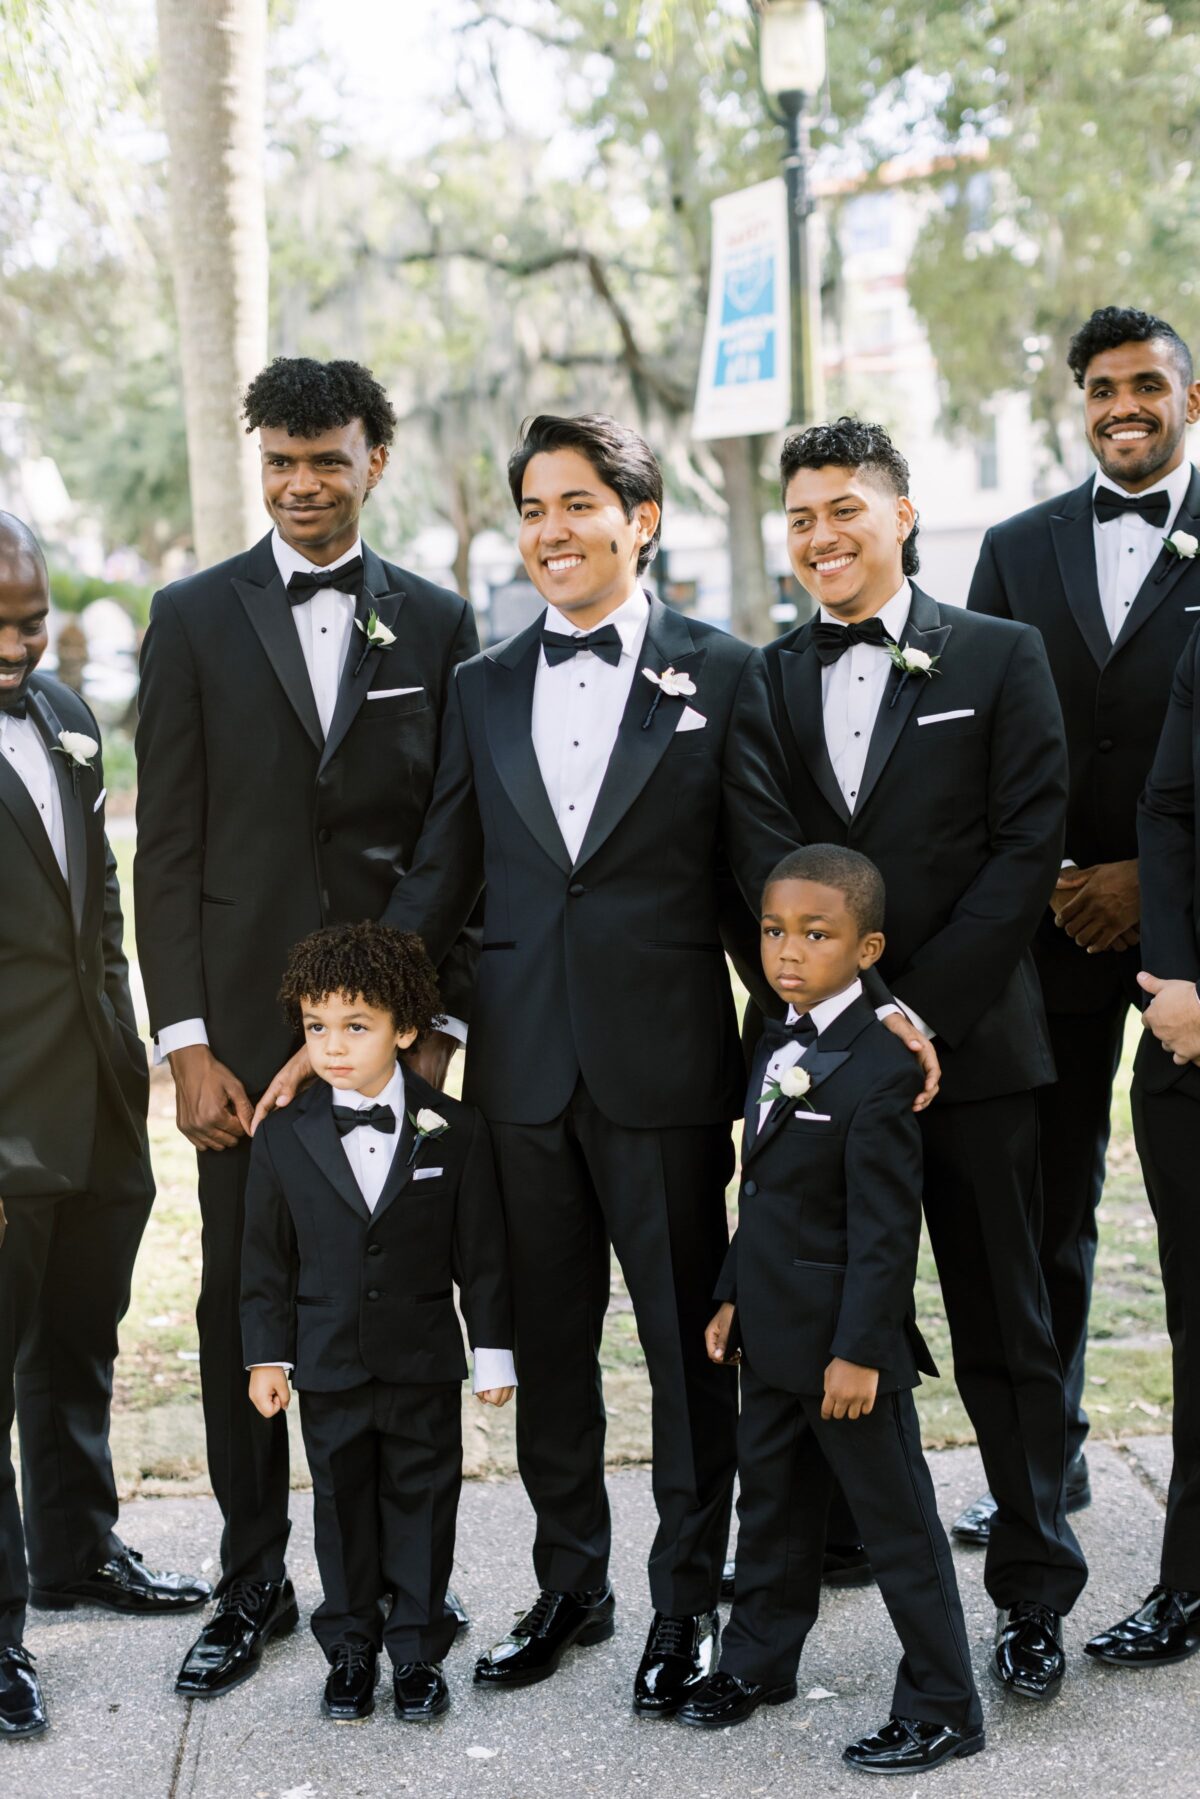 Black tie wedding Groomsmen - Photography: Brooke Images